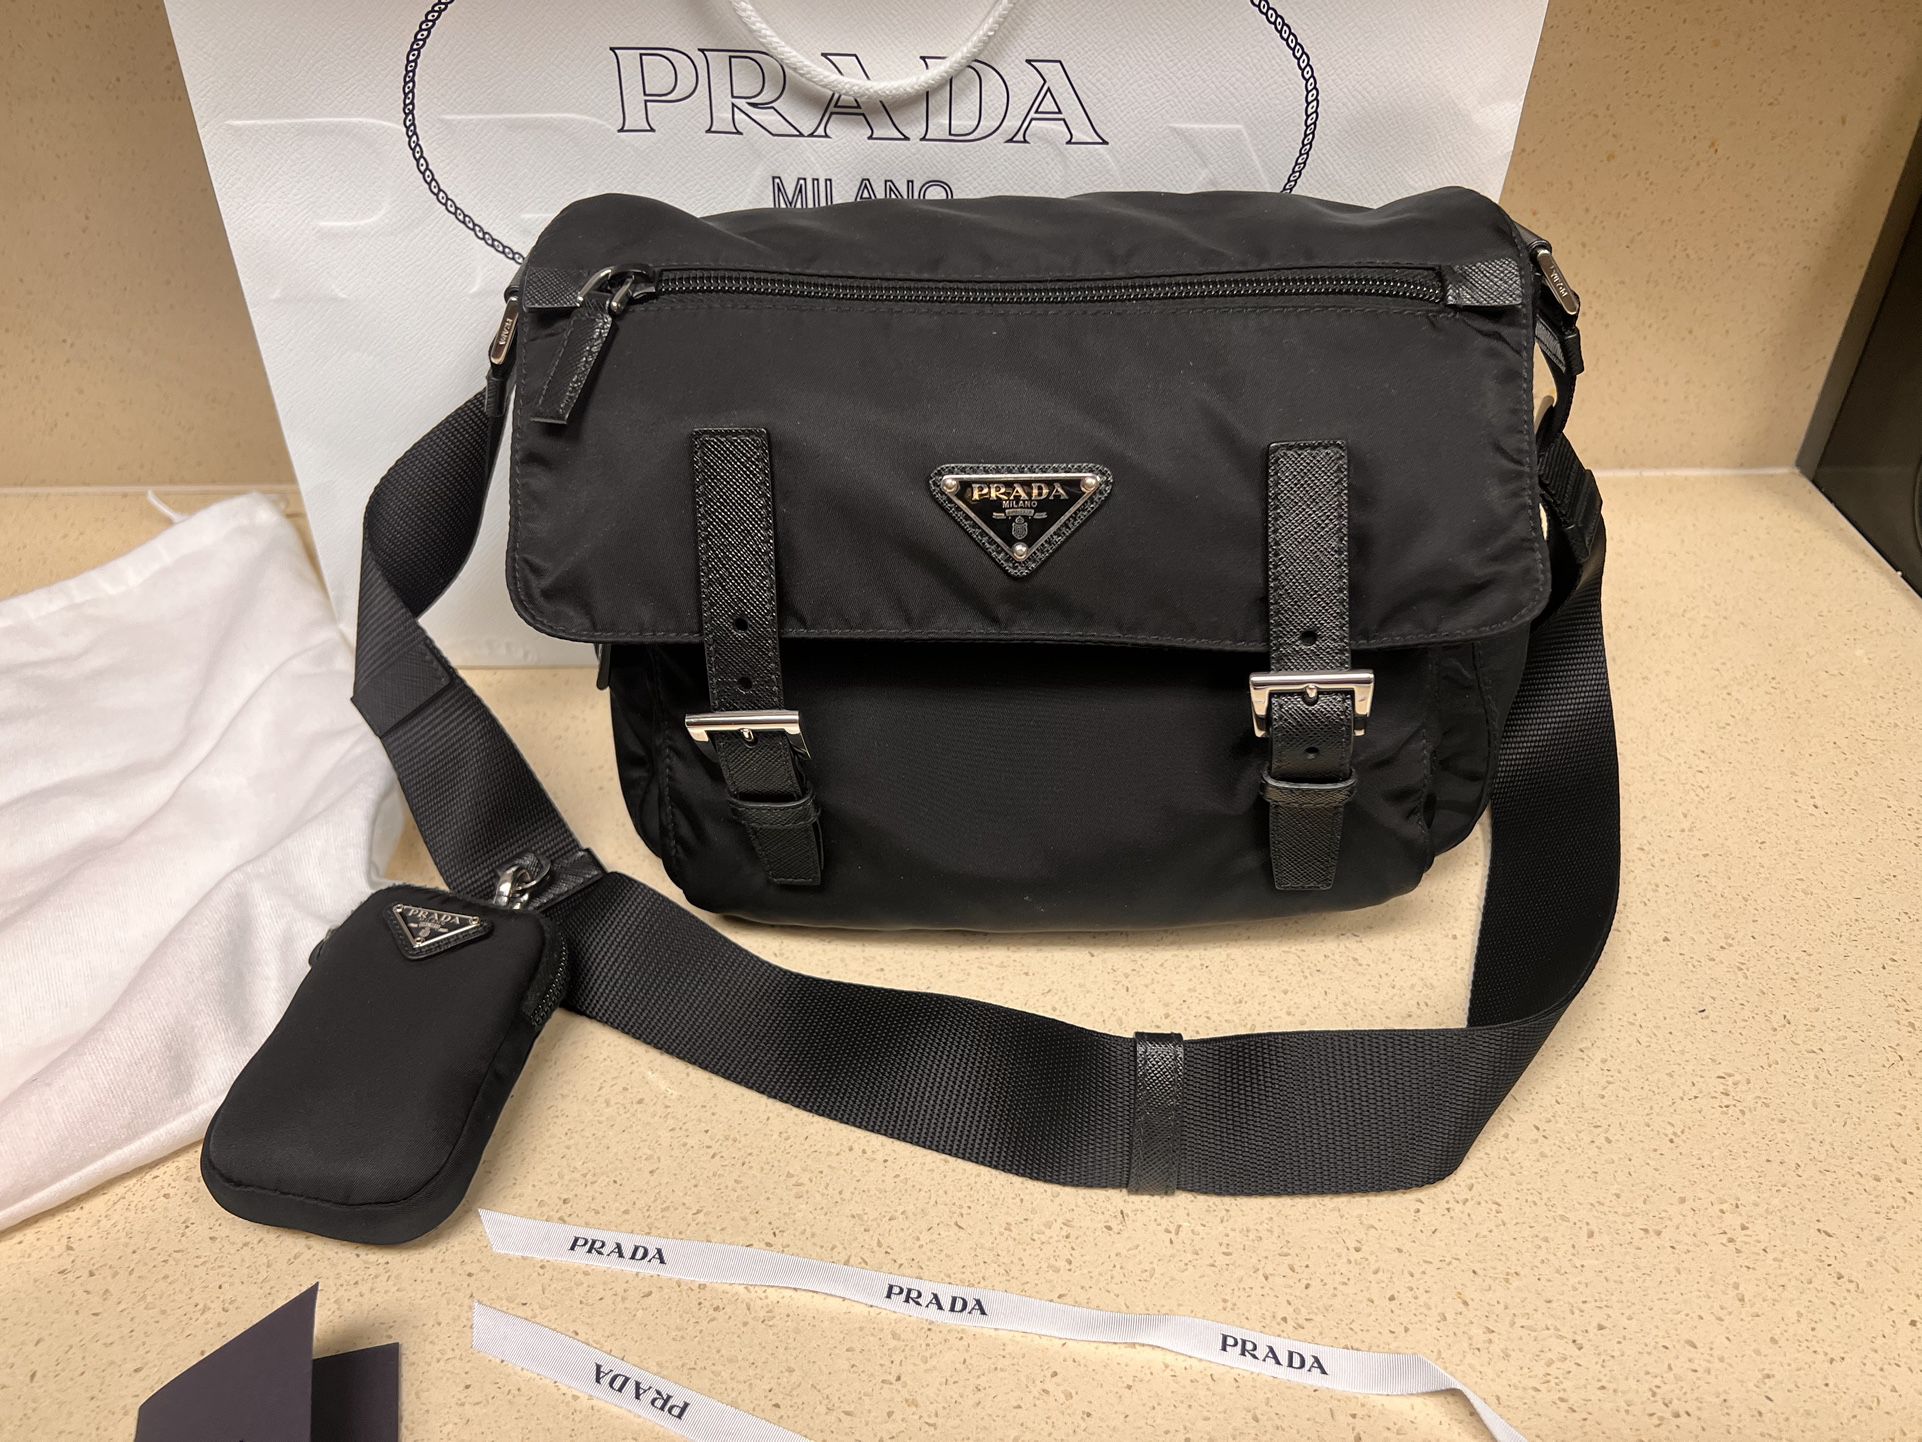 Prada Nylon Bag 2000 Re-Edition for Sale in Westview, FL - OfferUp